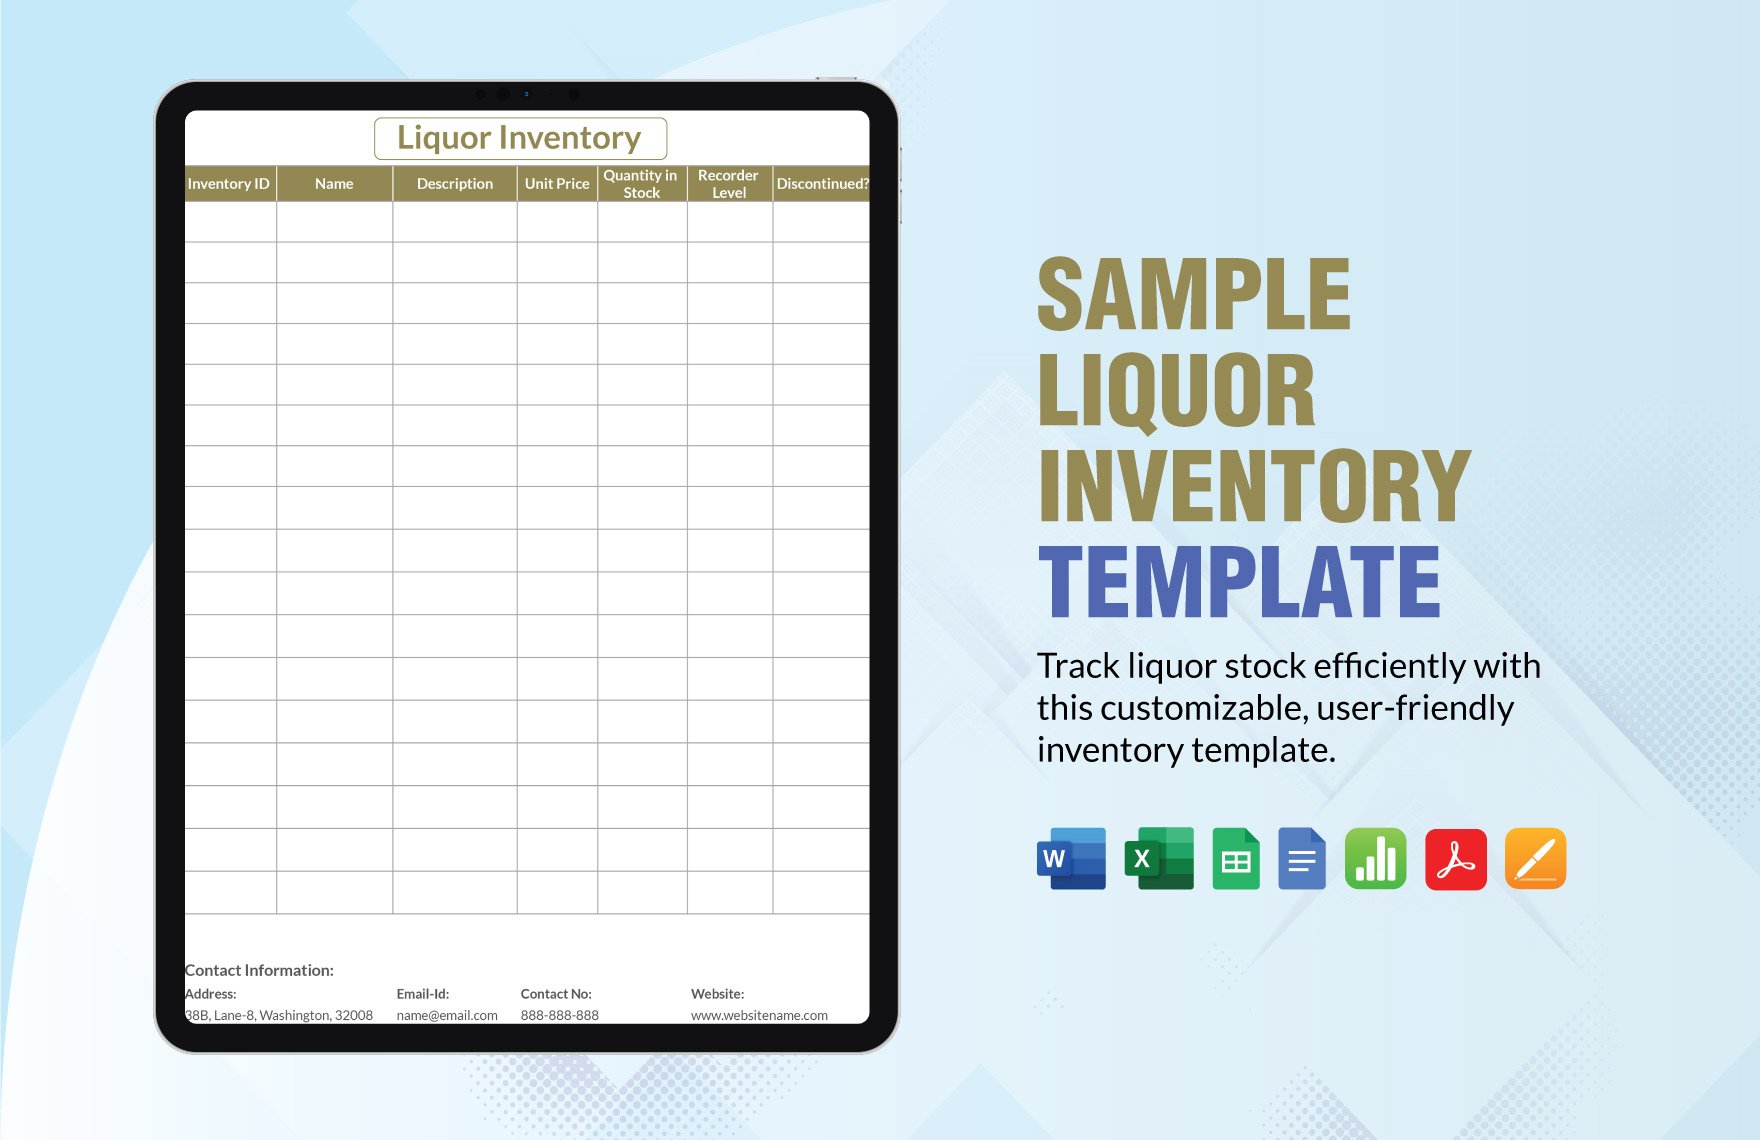 Sample Liquor Inventory Template